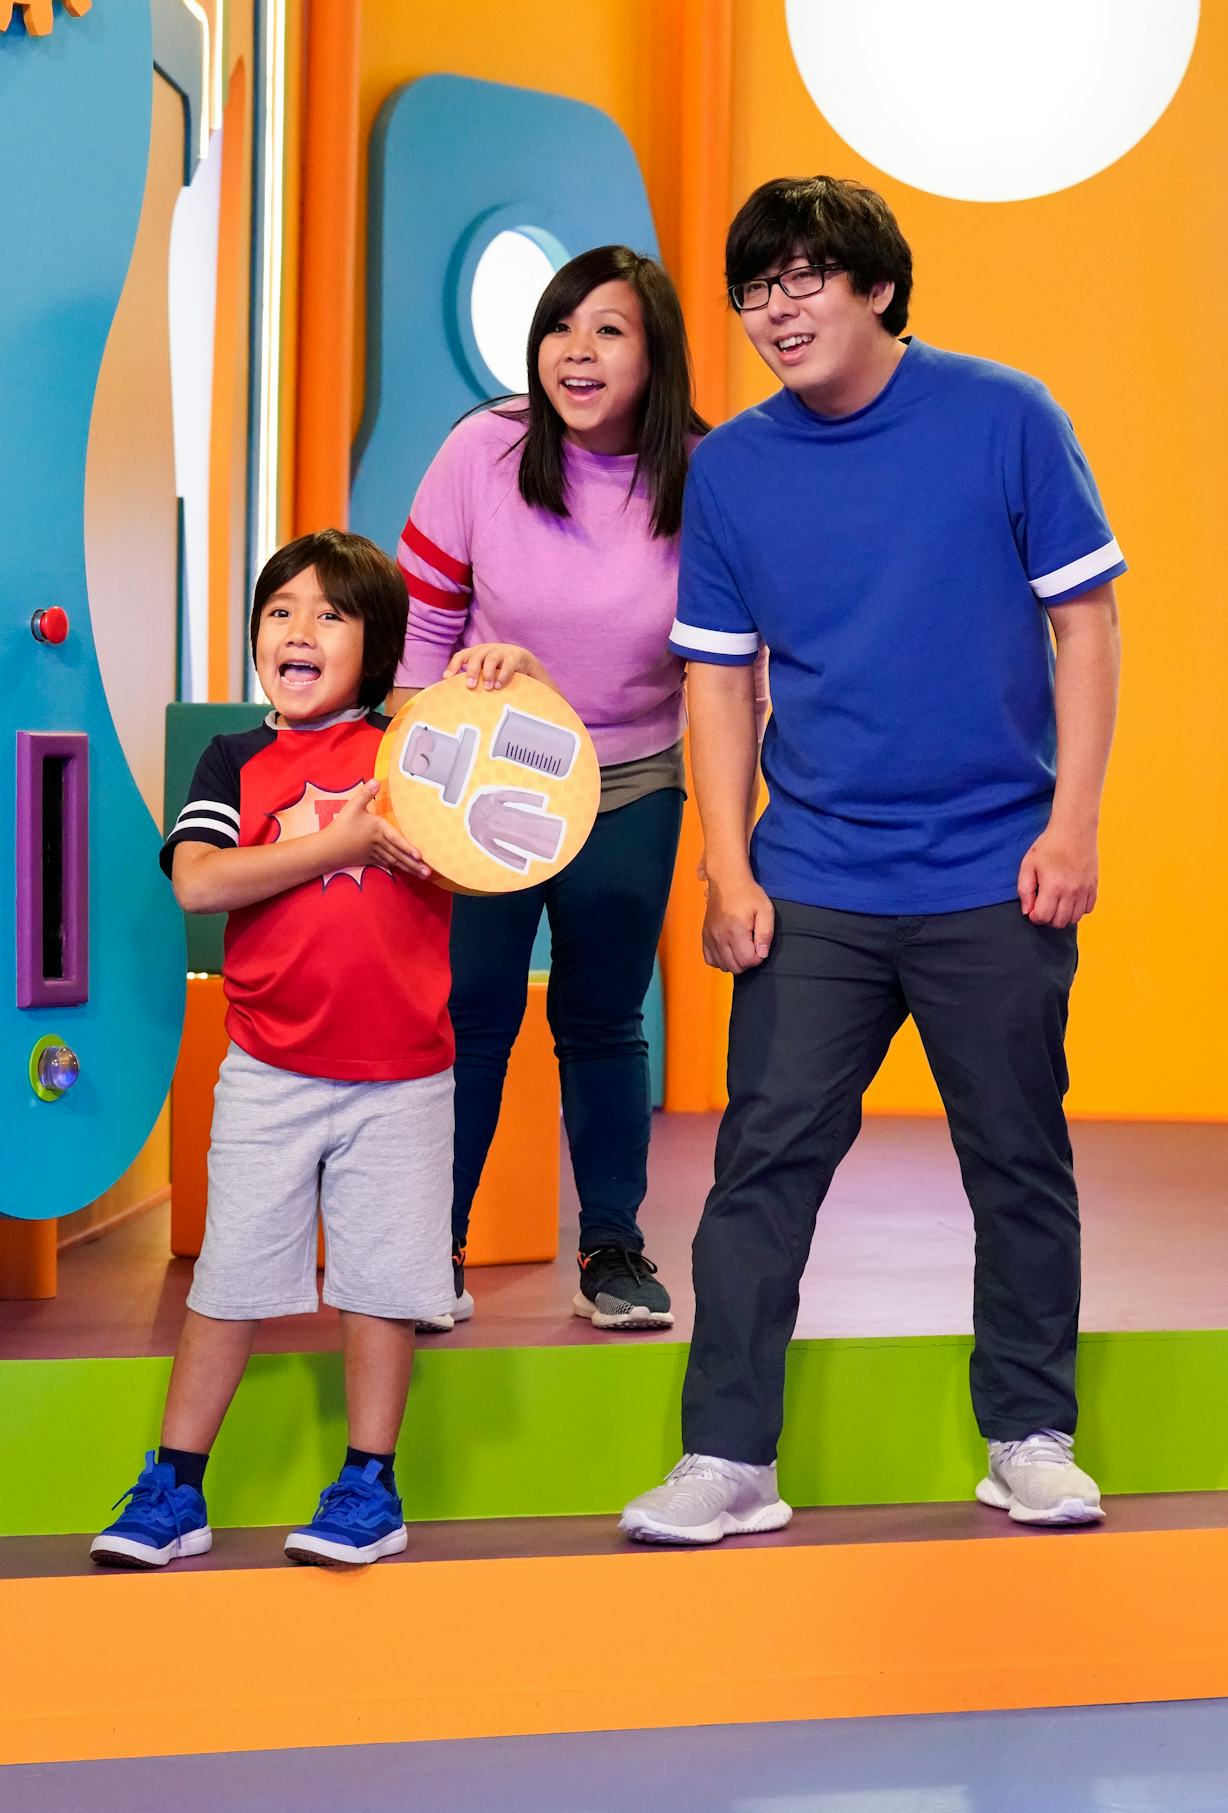 Nickelodeons Preschool Series Ryans Mystery Playdate Features The Star Of The Popular